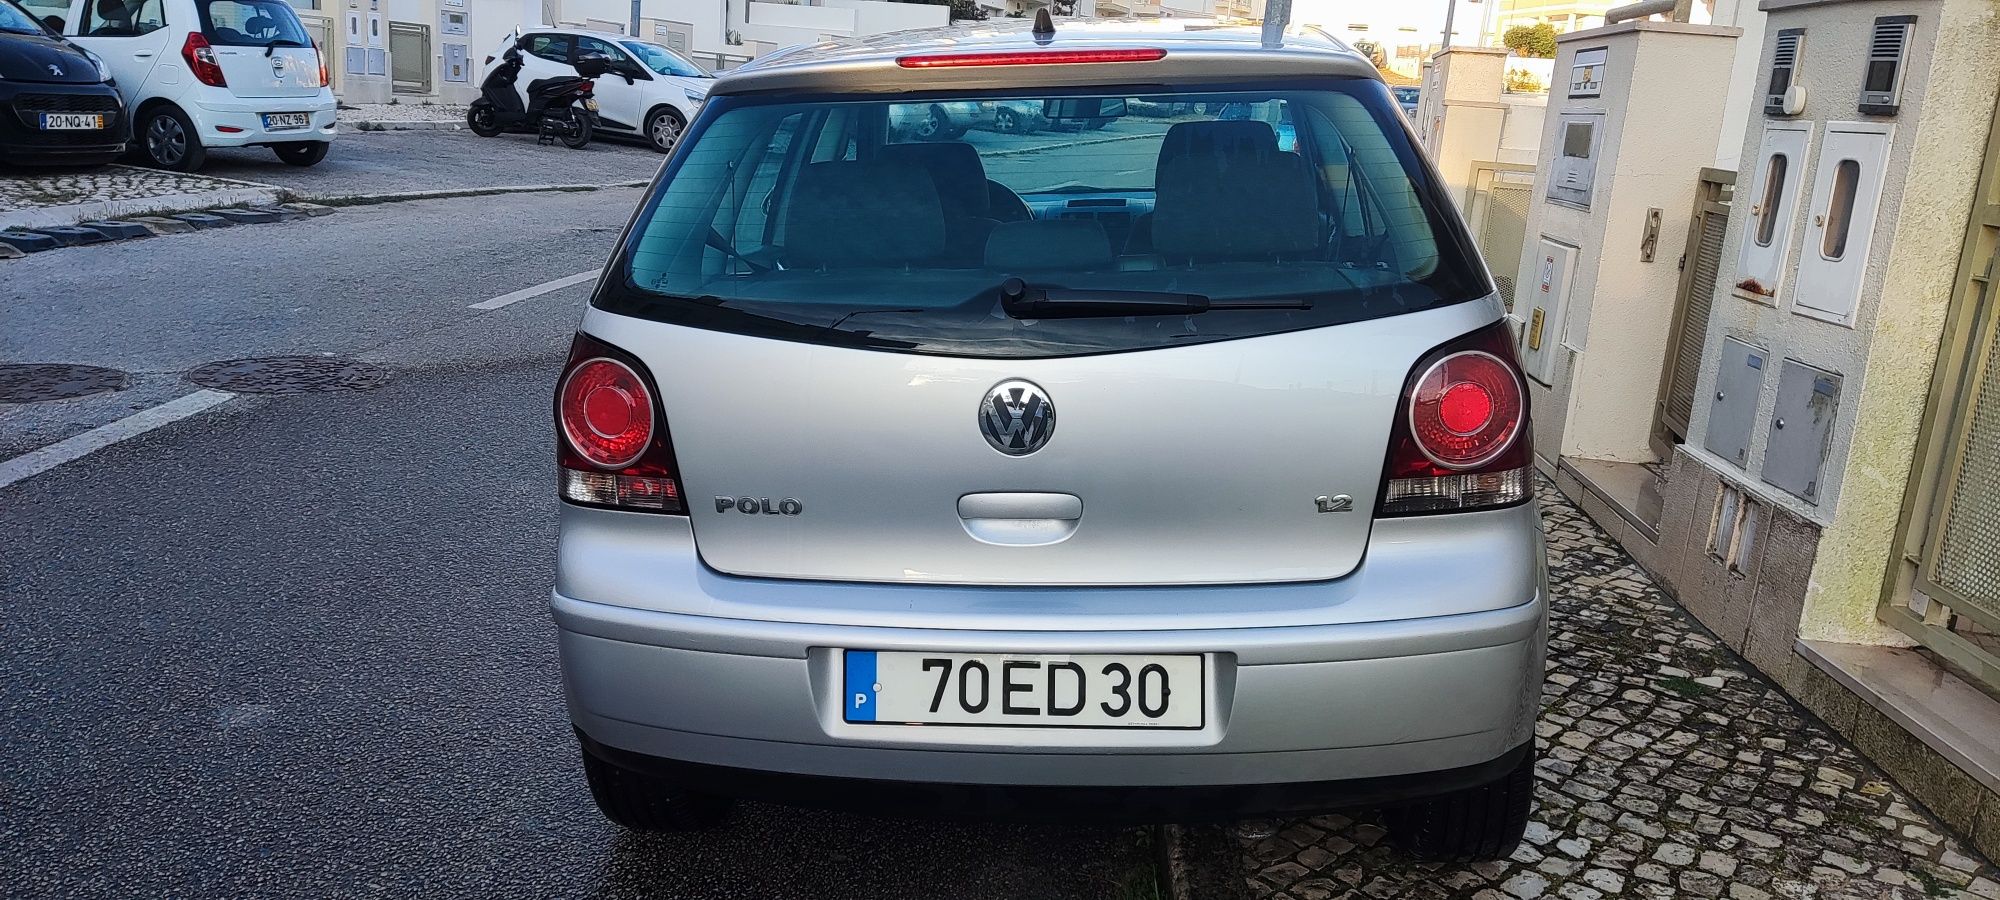 VW polo 1.2 70cv 65596 km